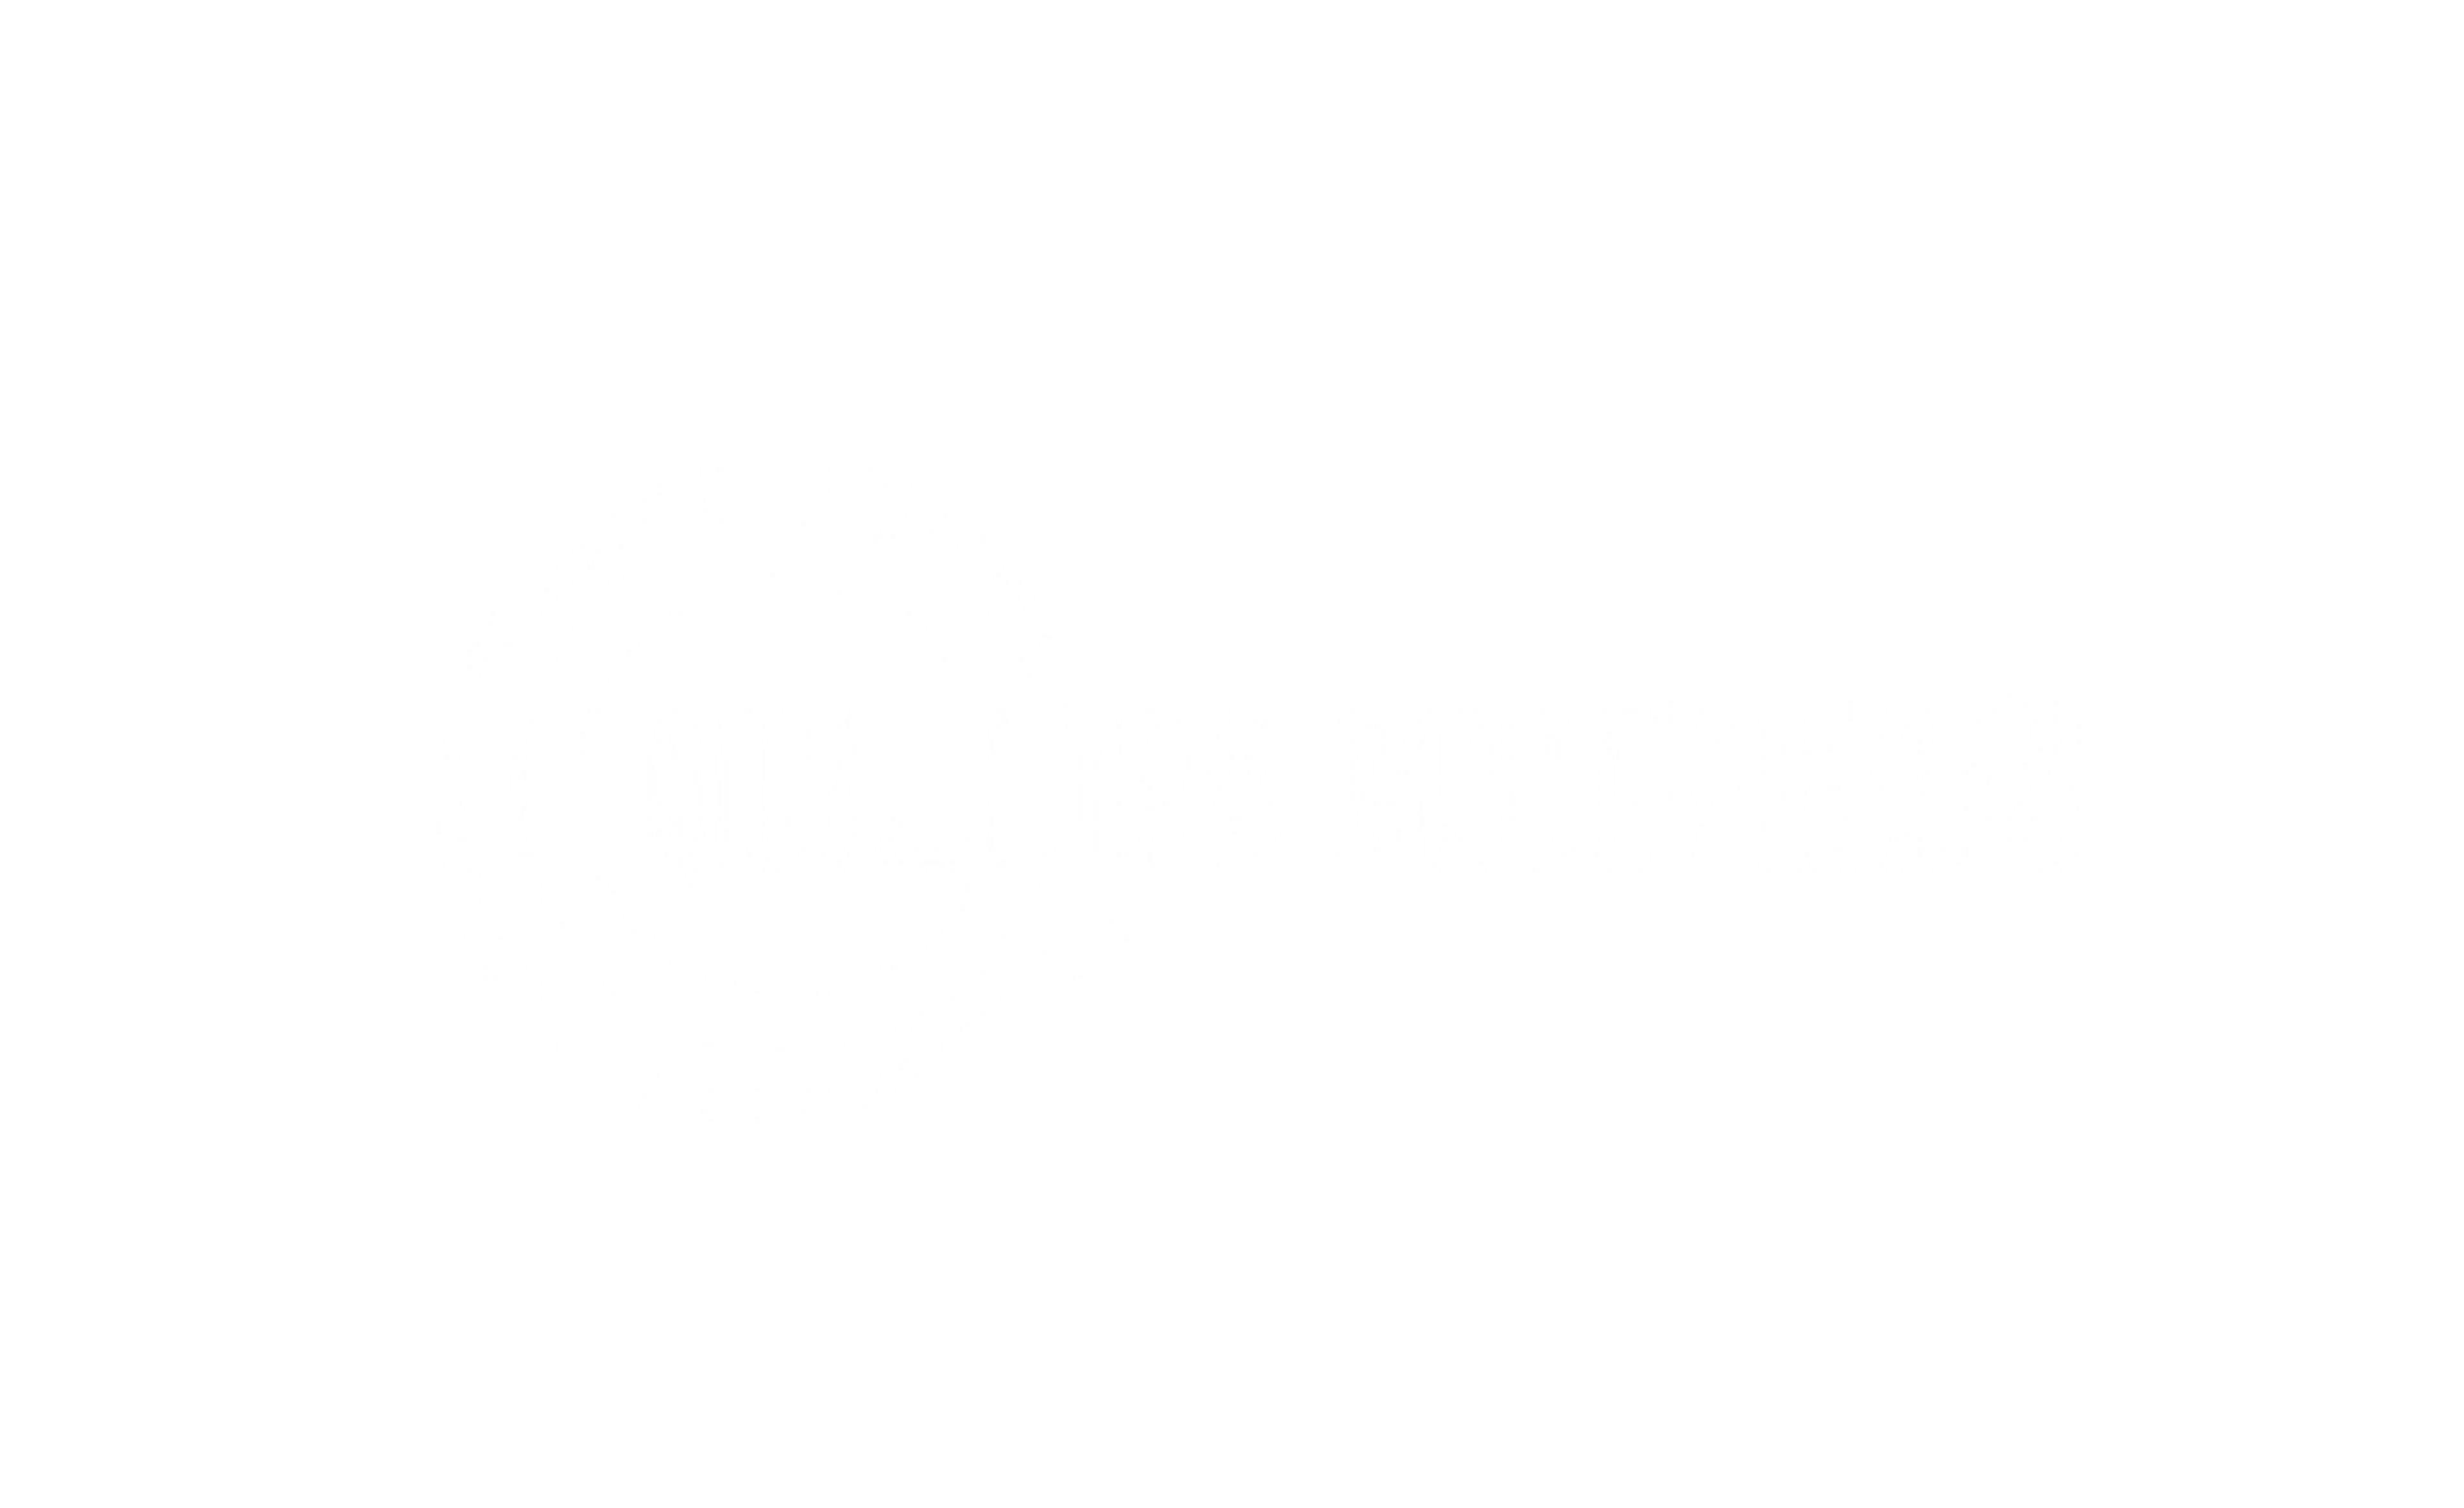 Qualiora groep verzekeren logo